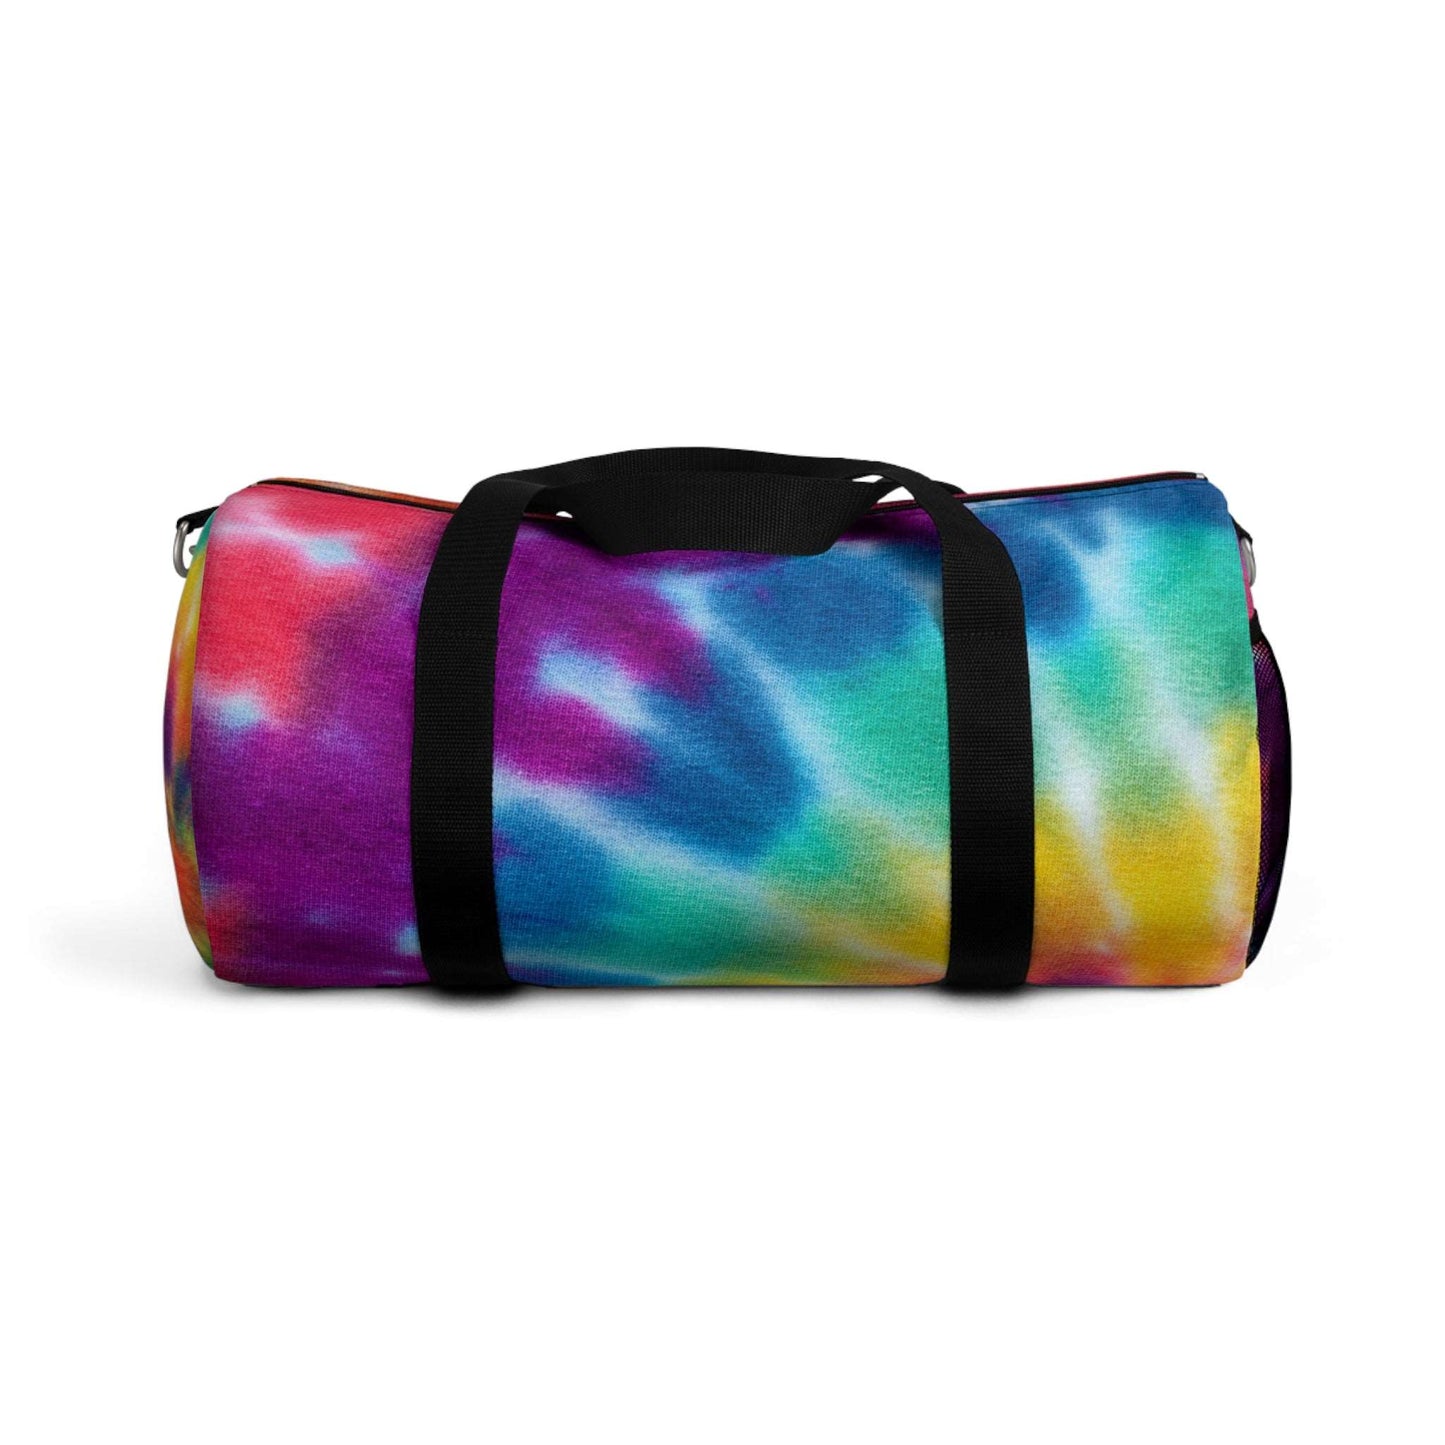 Colorful Tie-Dye Duffel Bag